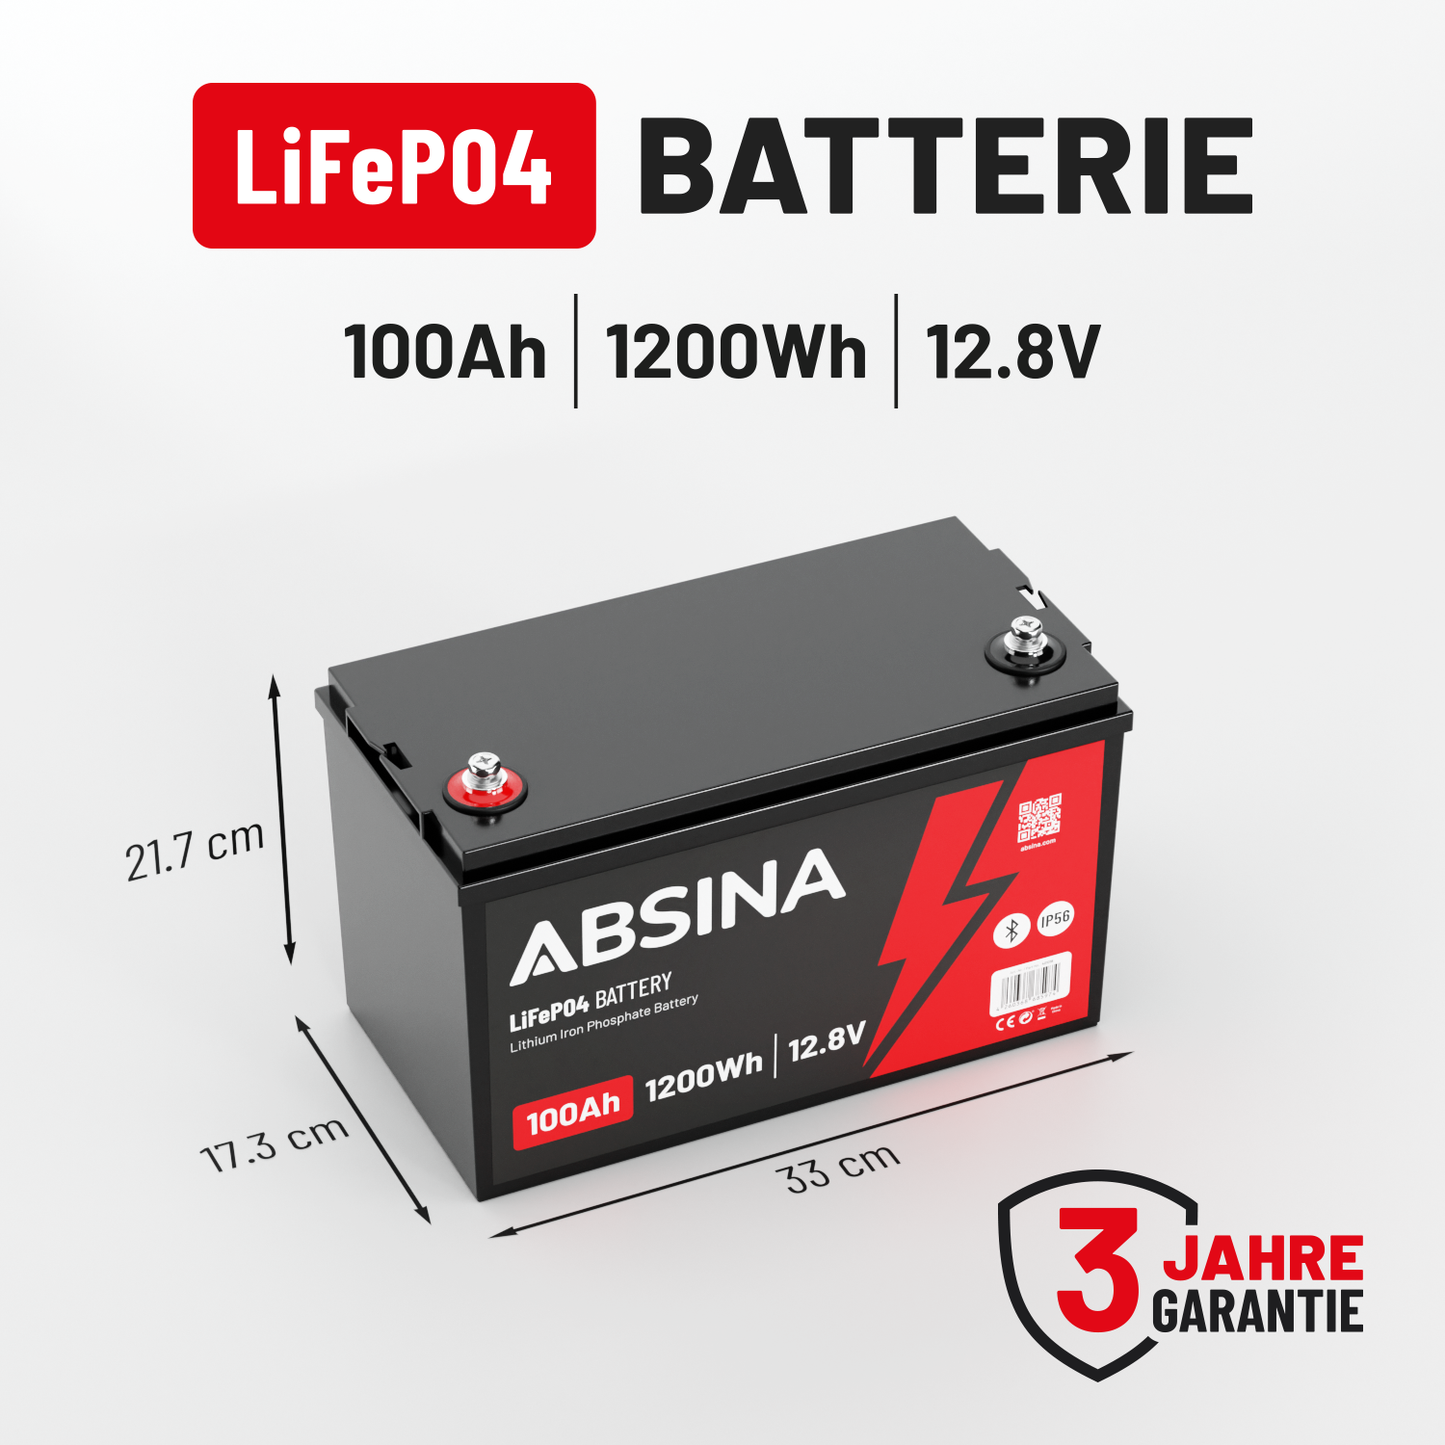 LiFeP04 Batterie